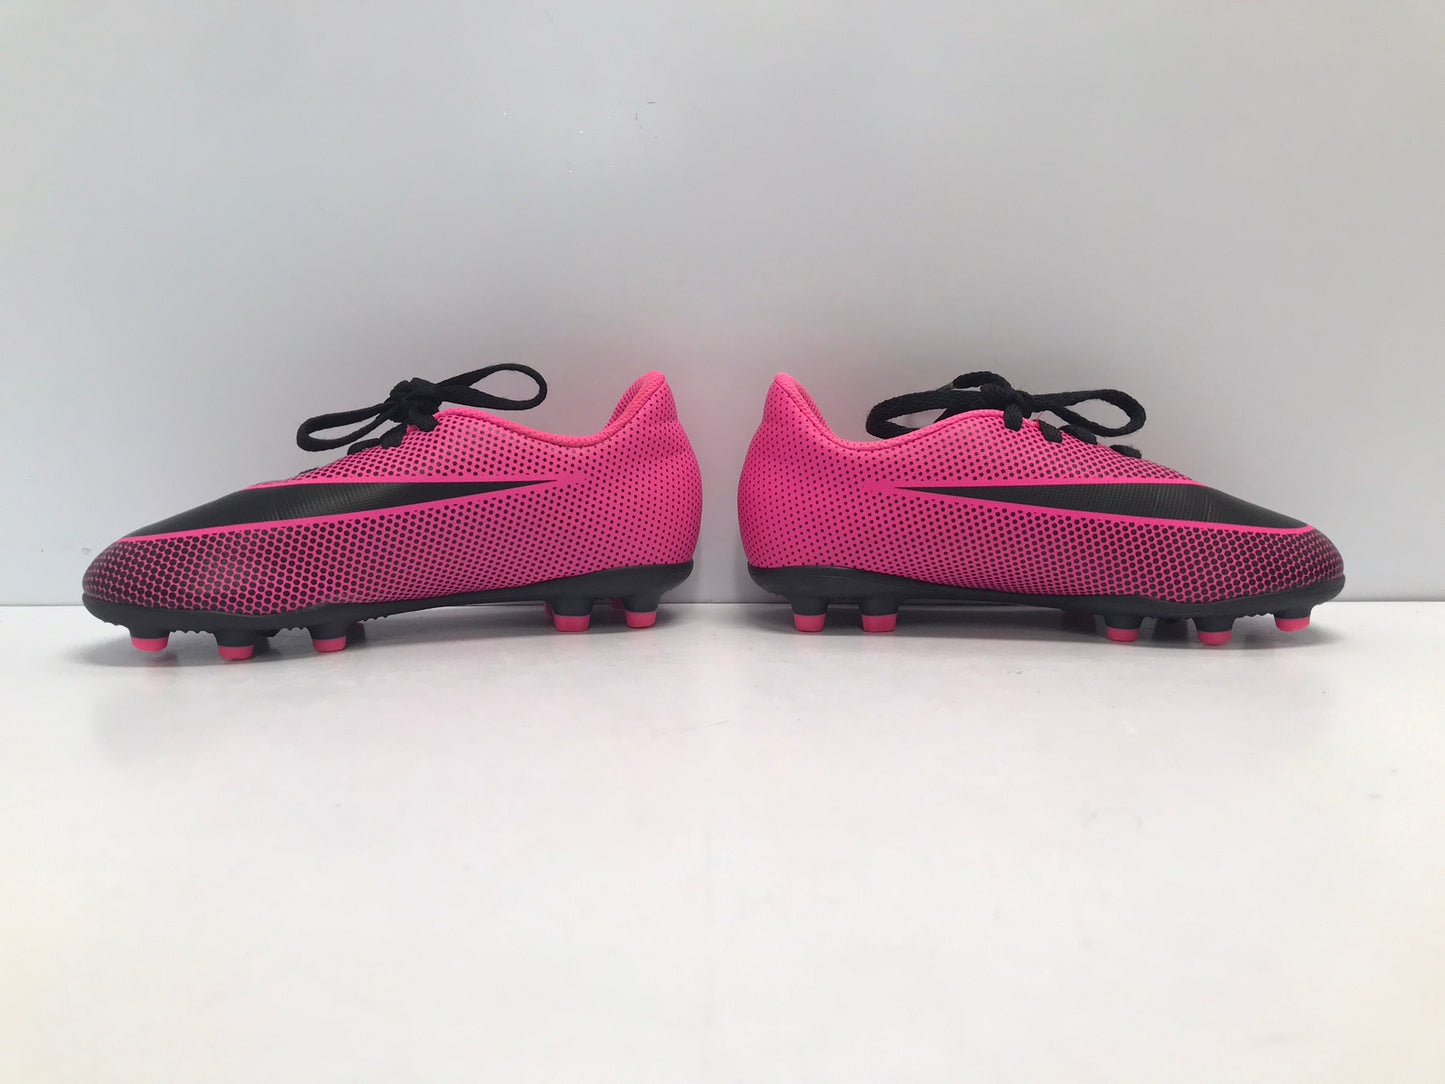 Soccer Shoes Cleats Child Size 11 Nike Fushia Pink and Black Like New